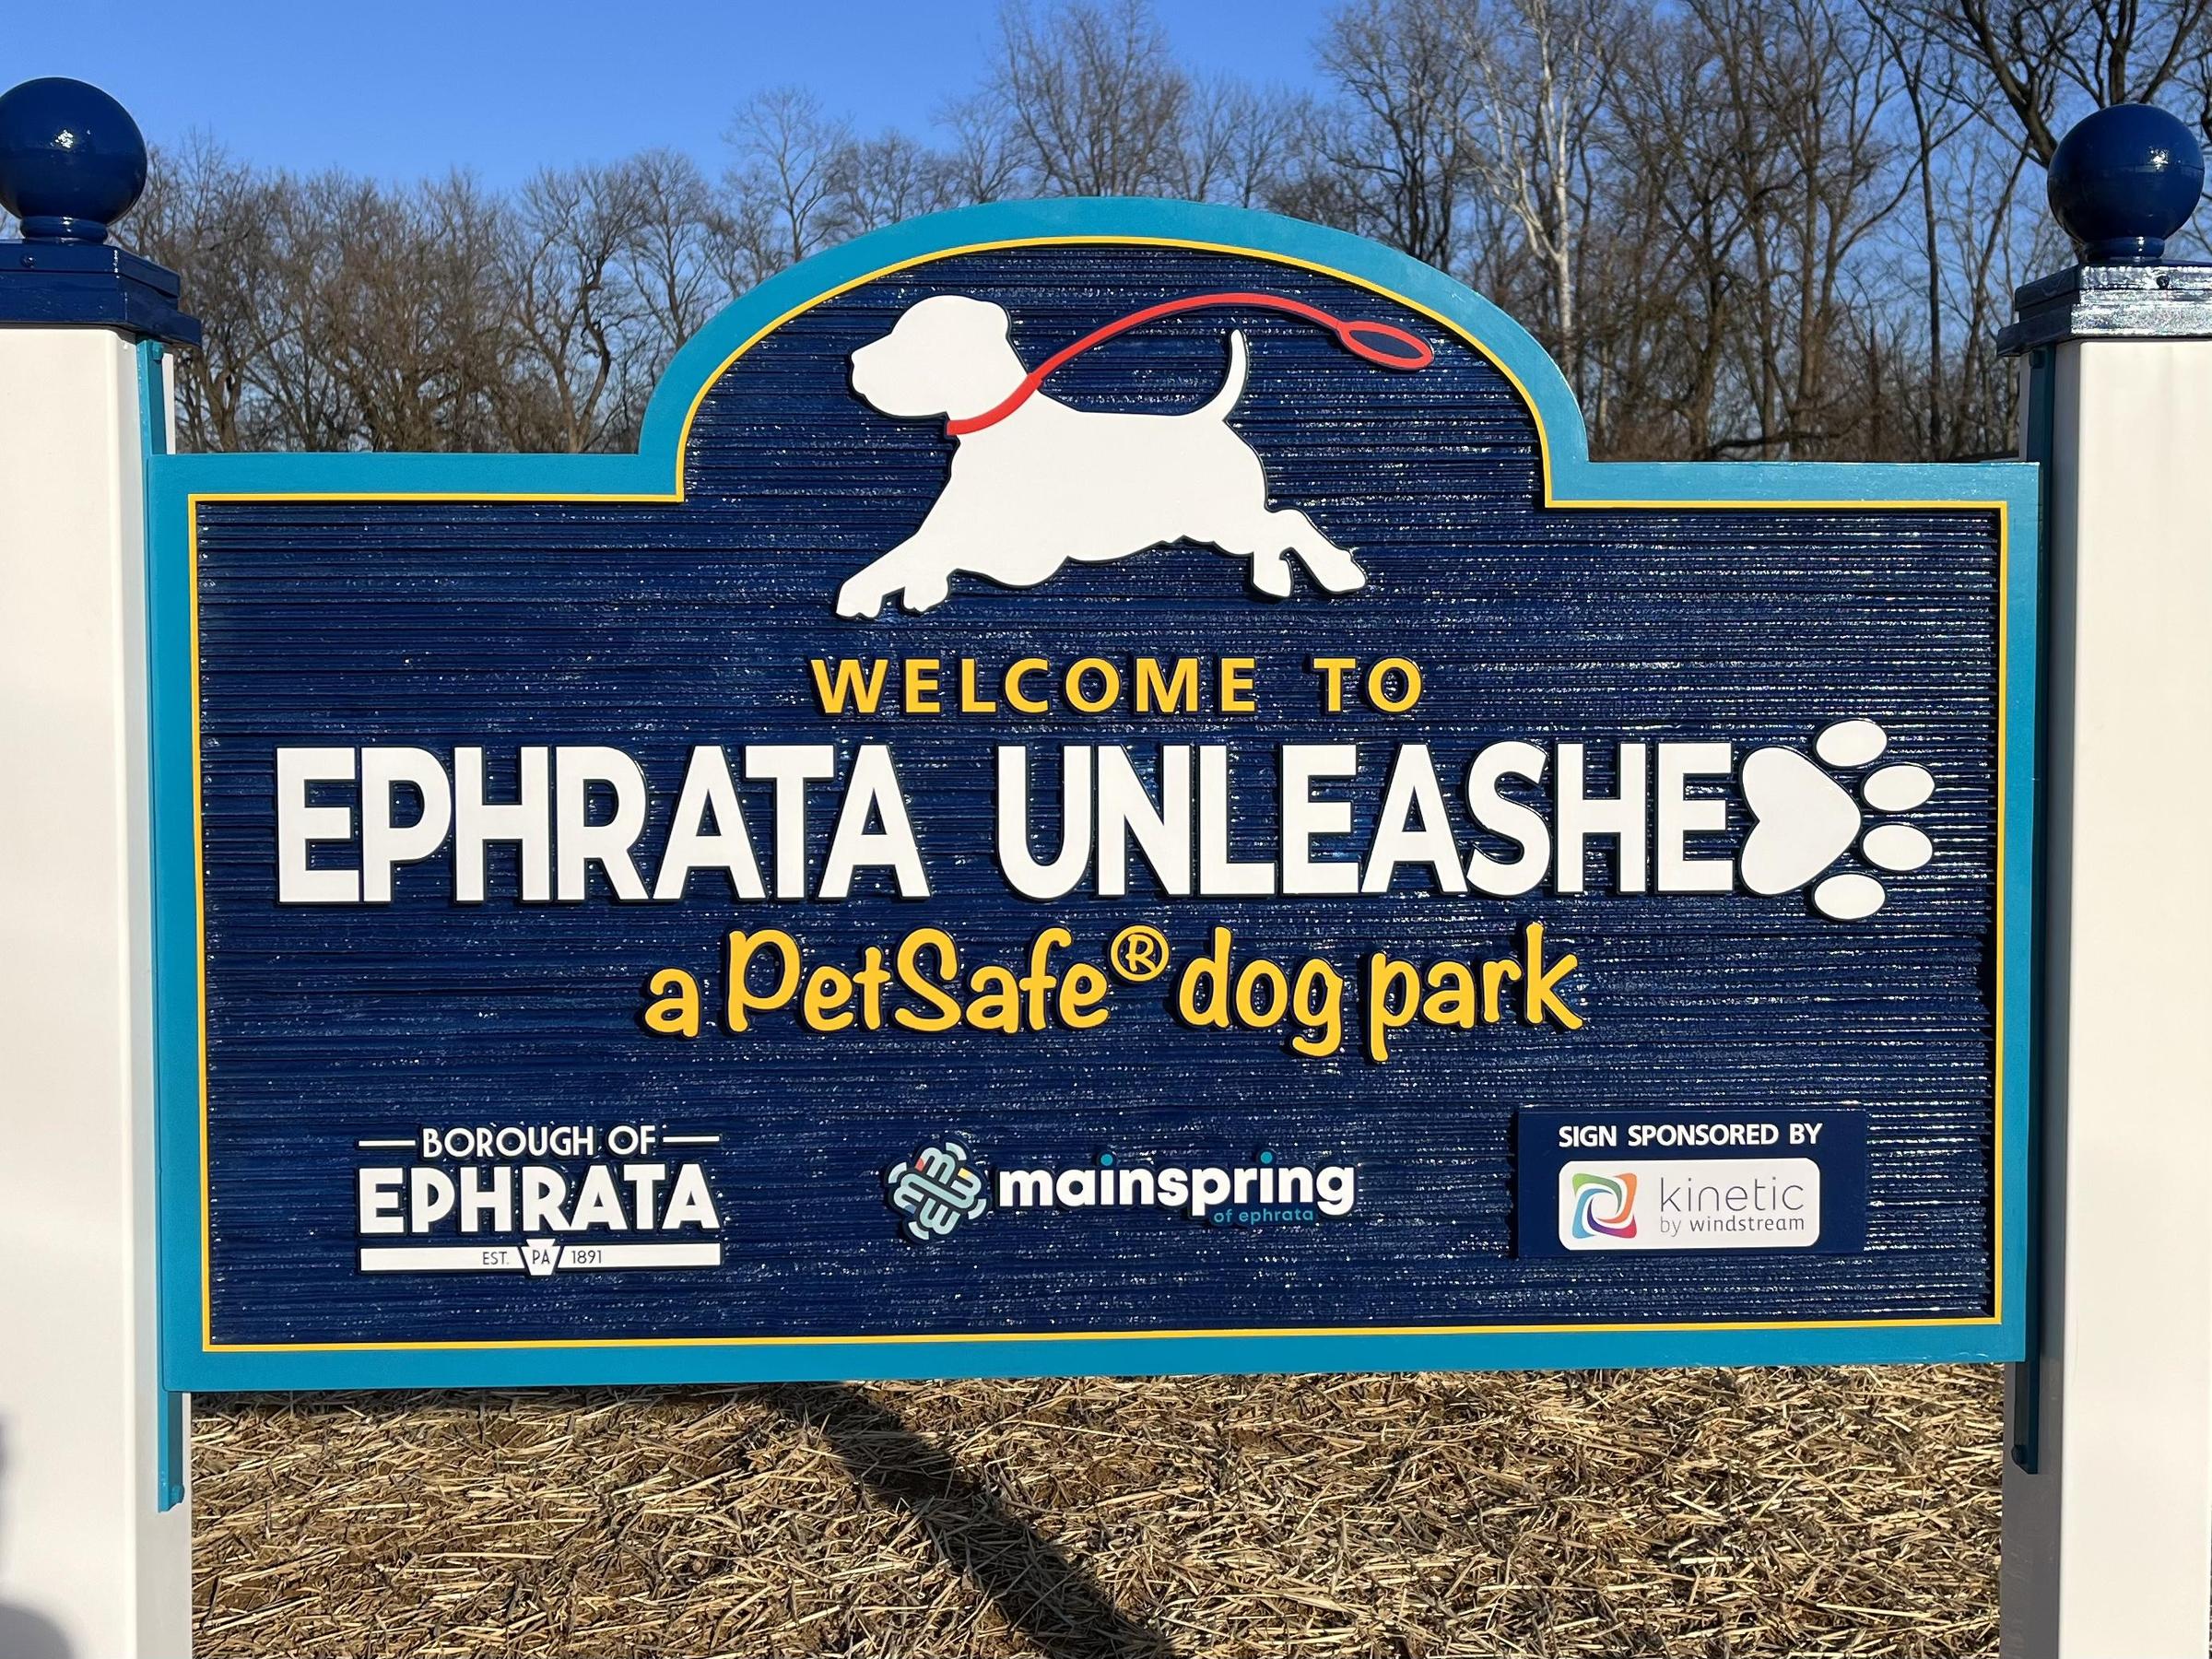 Pet Friendly Ephrata Unleashed Dog Park